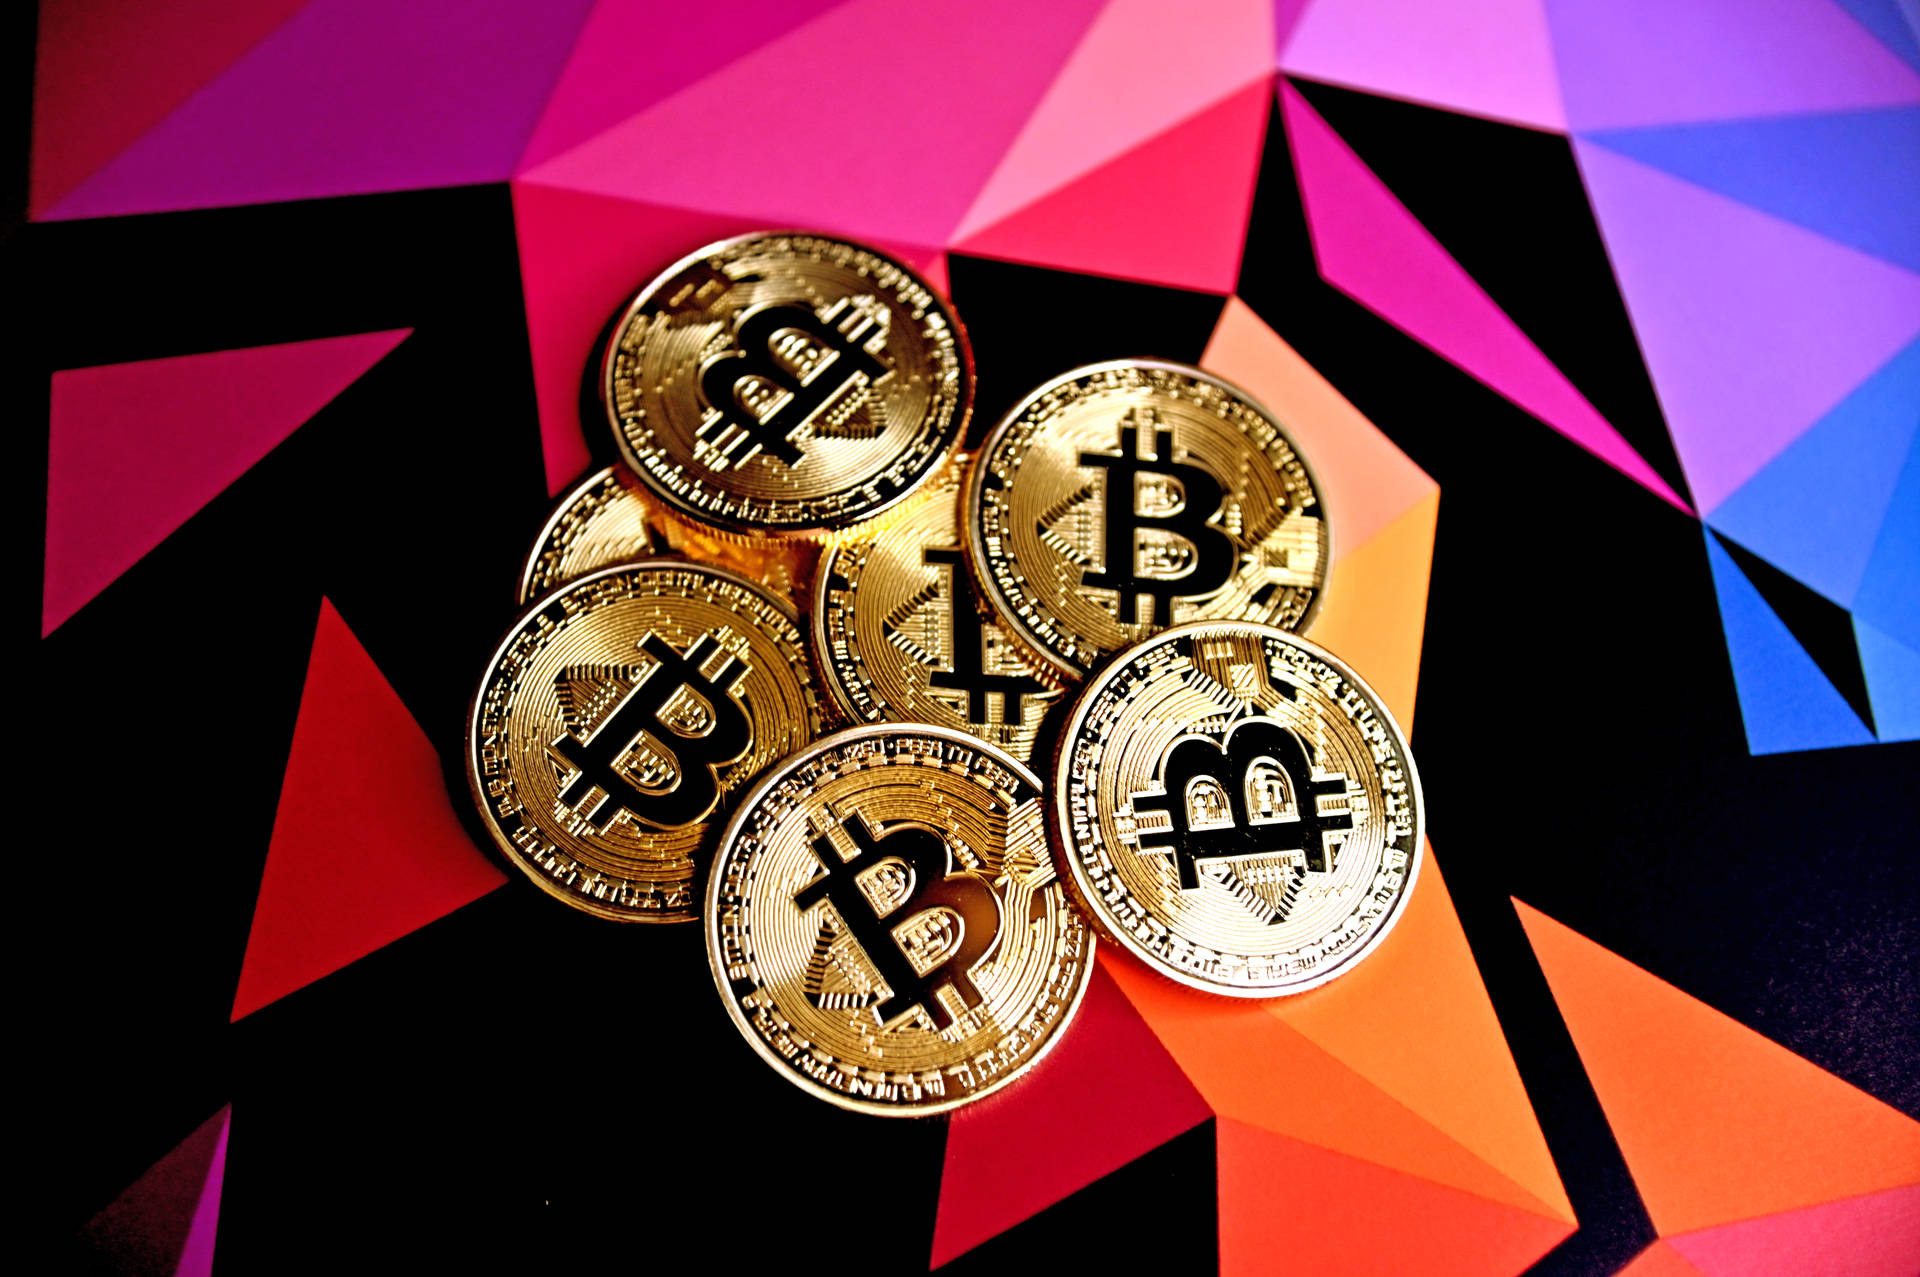 Colorful Geometric Art Bitcoins Background